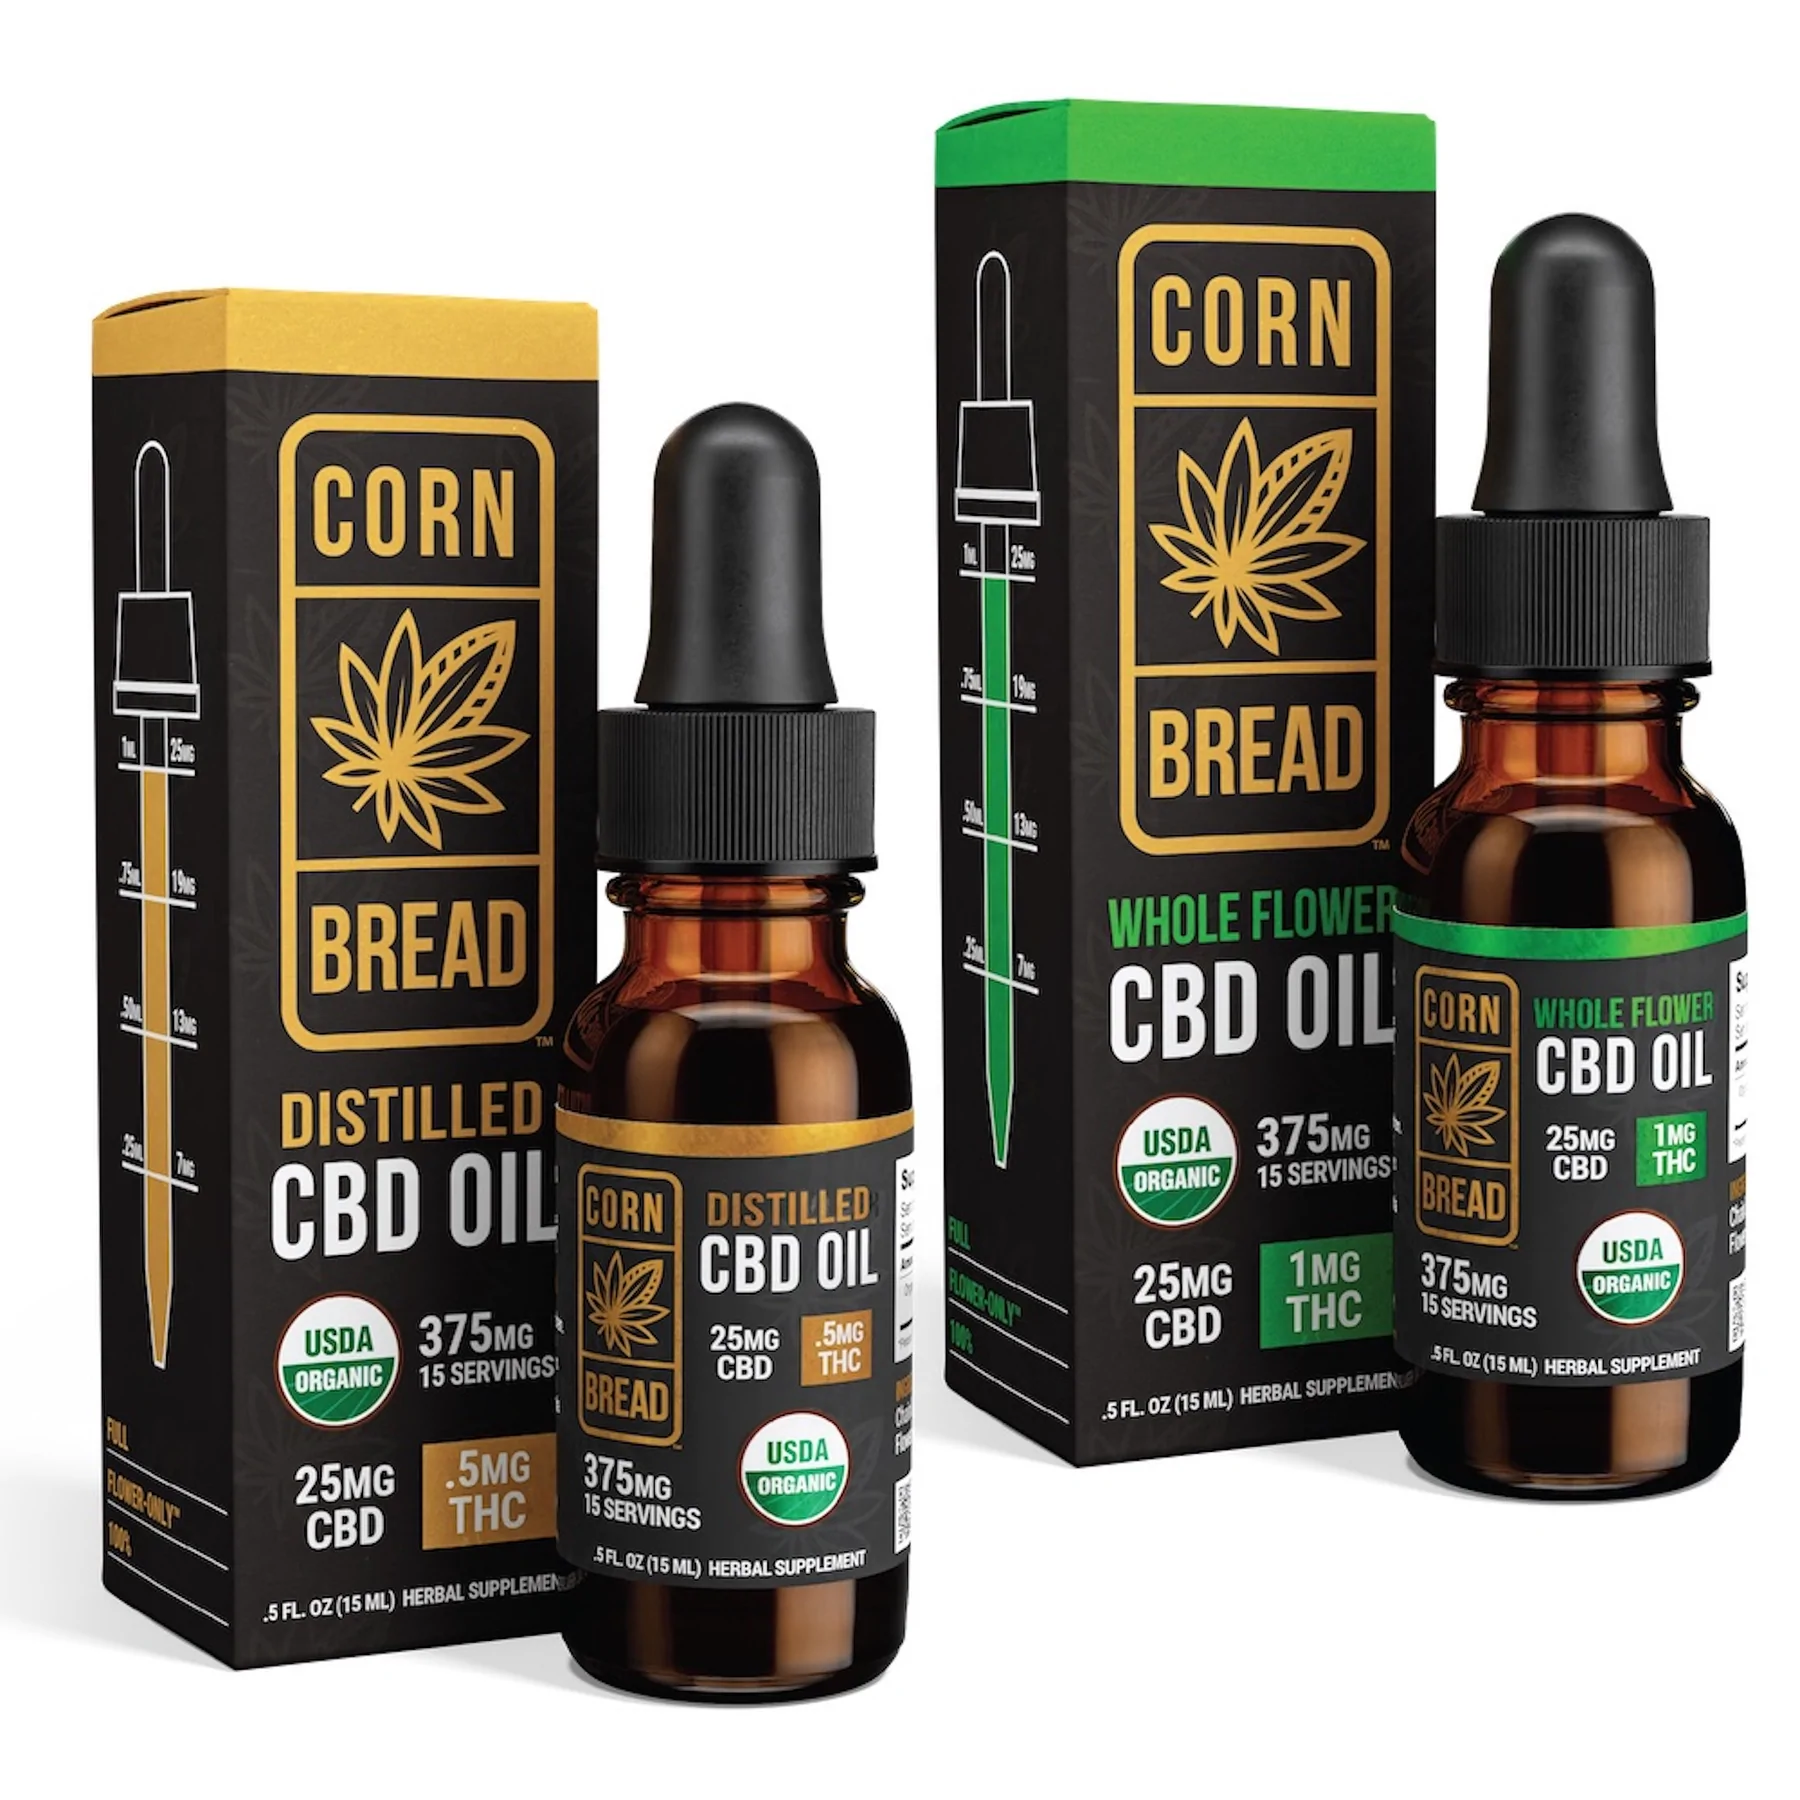 Cornbread Hemp – USDA Certified Organic AM – PM CBD Oil Bundle (available in 300 mg or 1500 mg strength)